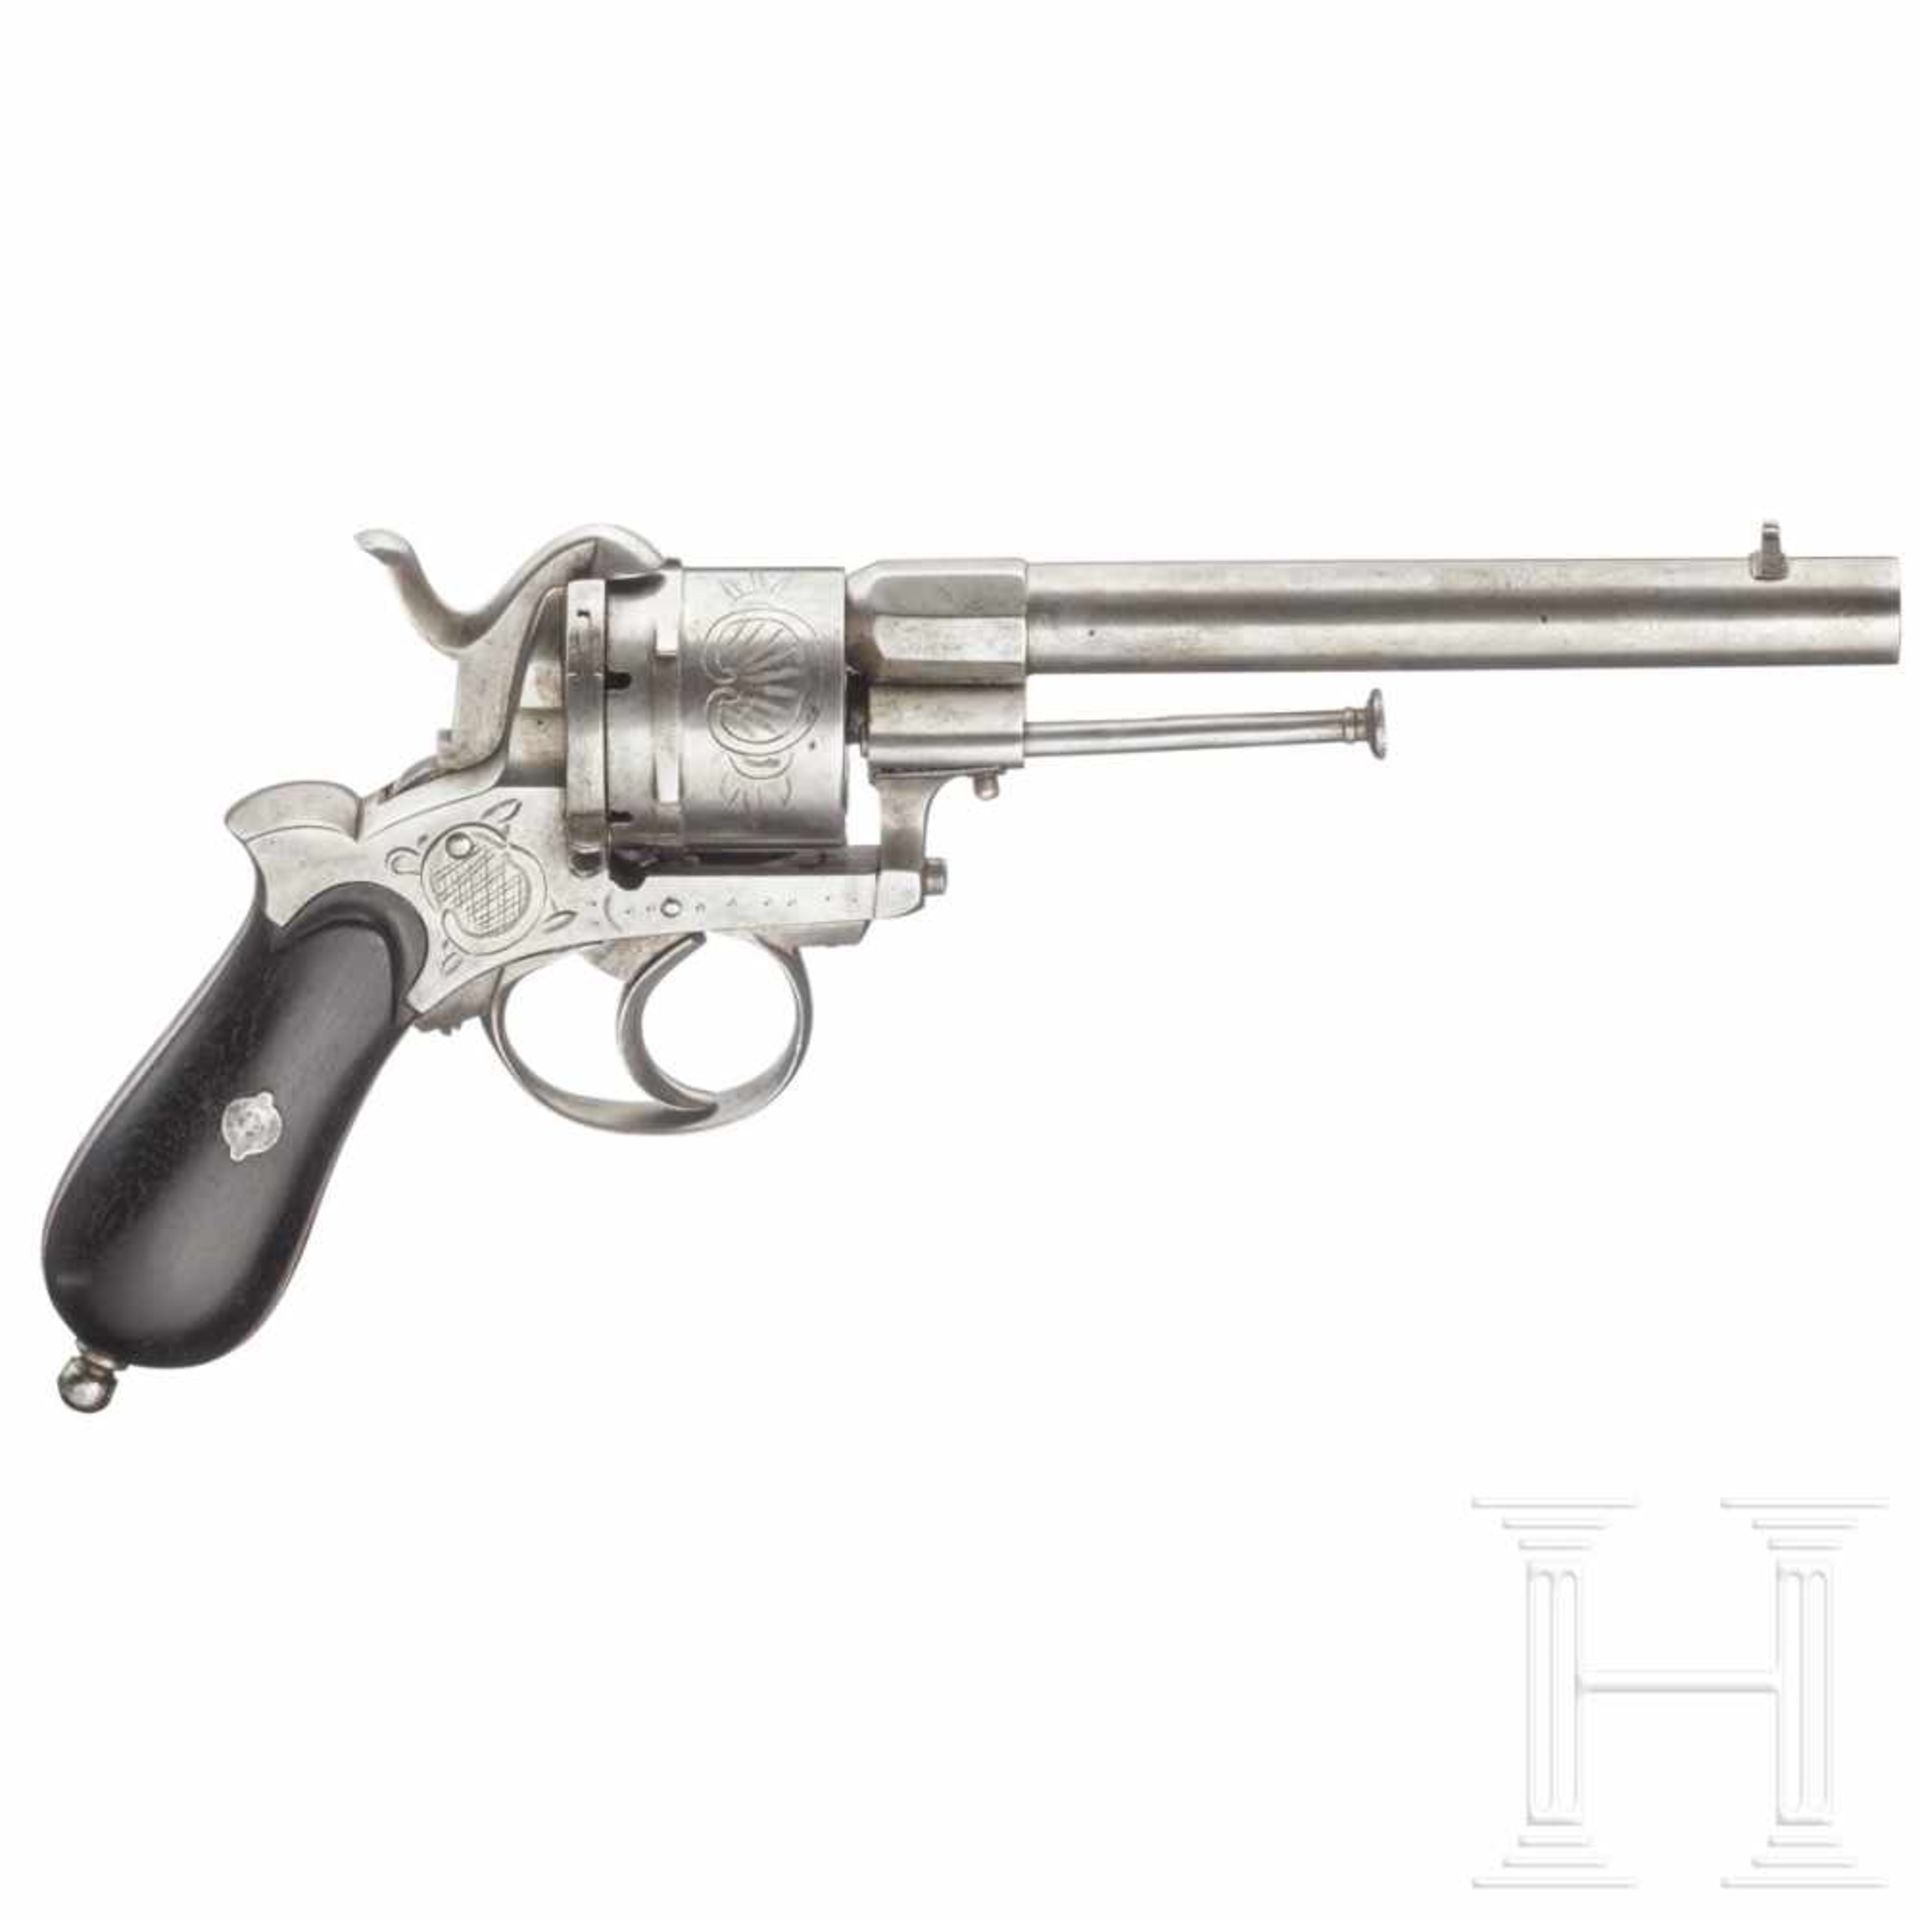 A Belgian pinfire revolver, ca. 1860Kal. 11 mm Lefaucheux, ohne Nr. Gezogener, an der Basis